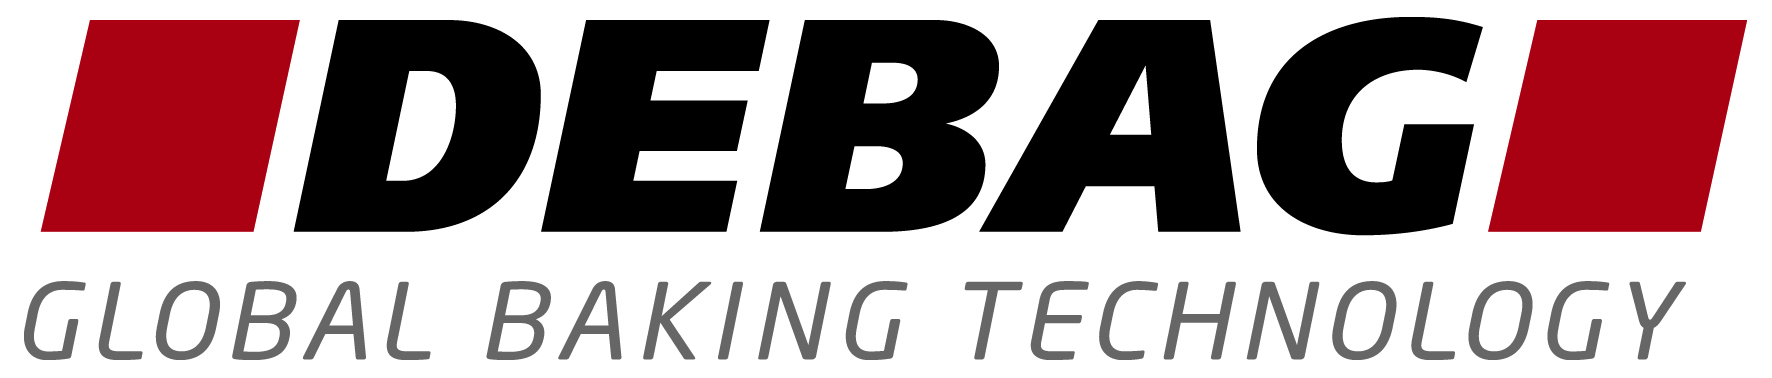 Logo DEBAG Deutsche Backofenbau GmbH